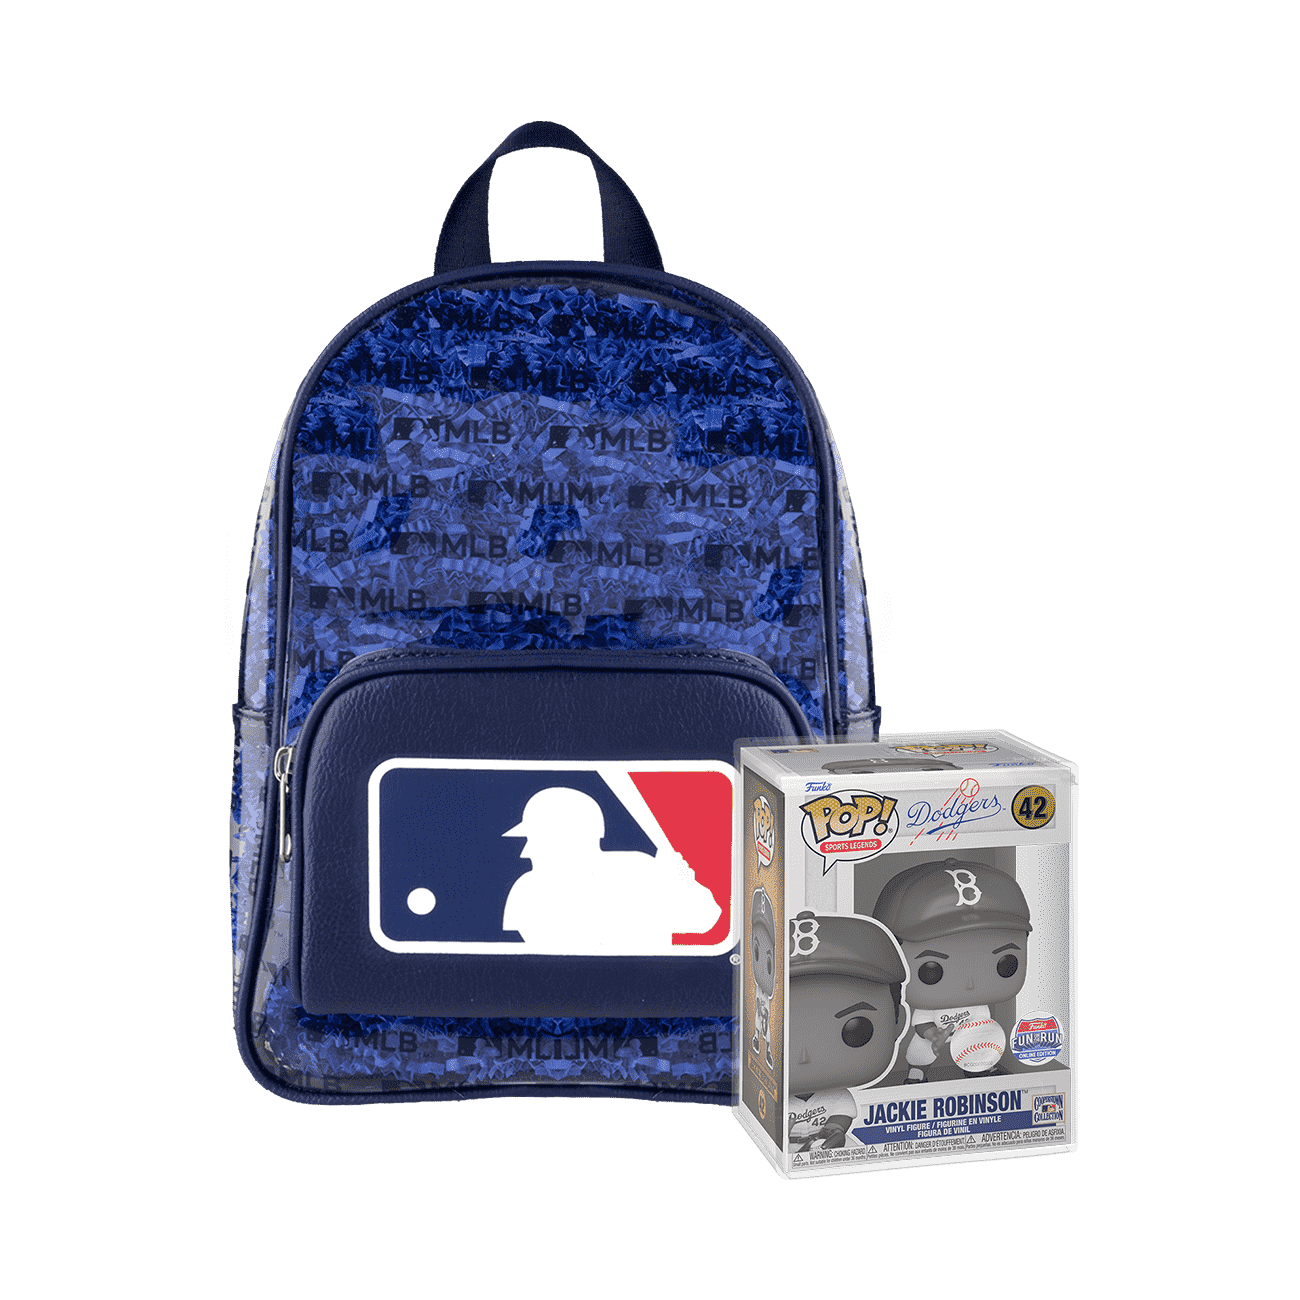 Jackie Robinson Blue MLB Jerseys for sale